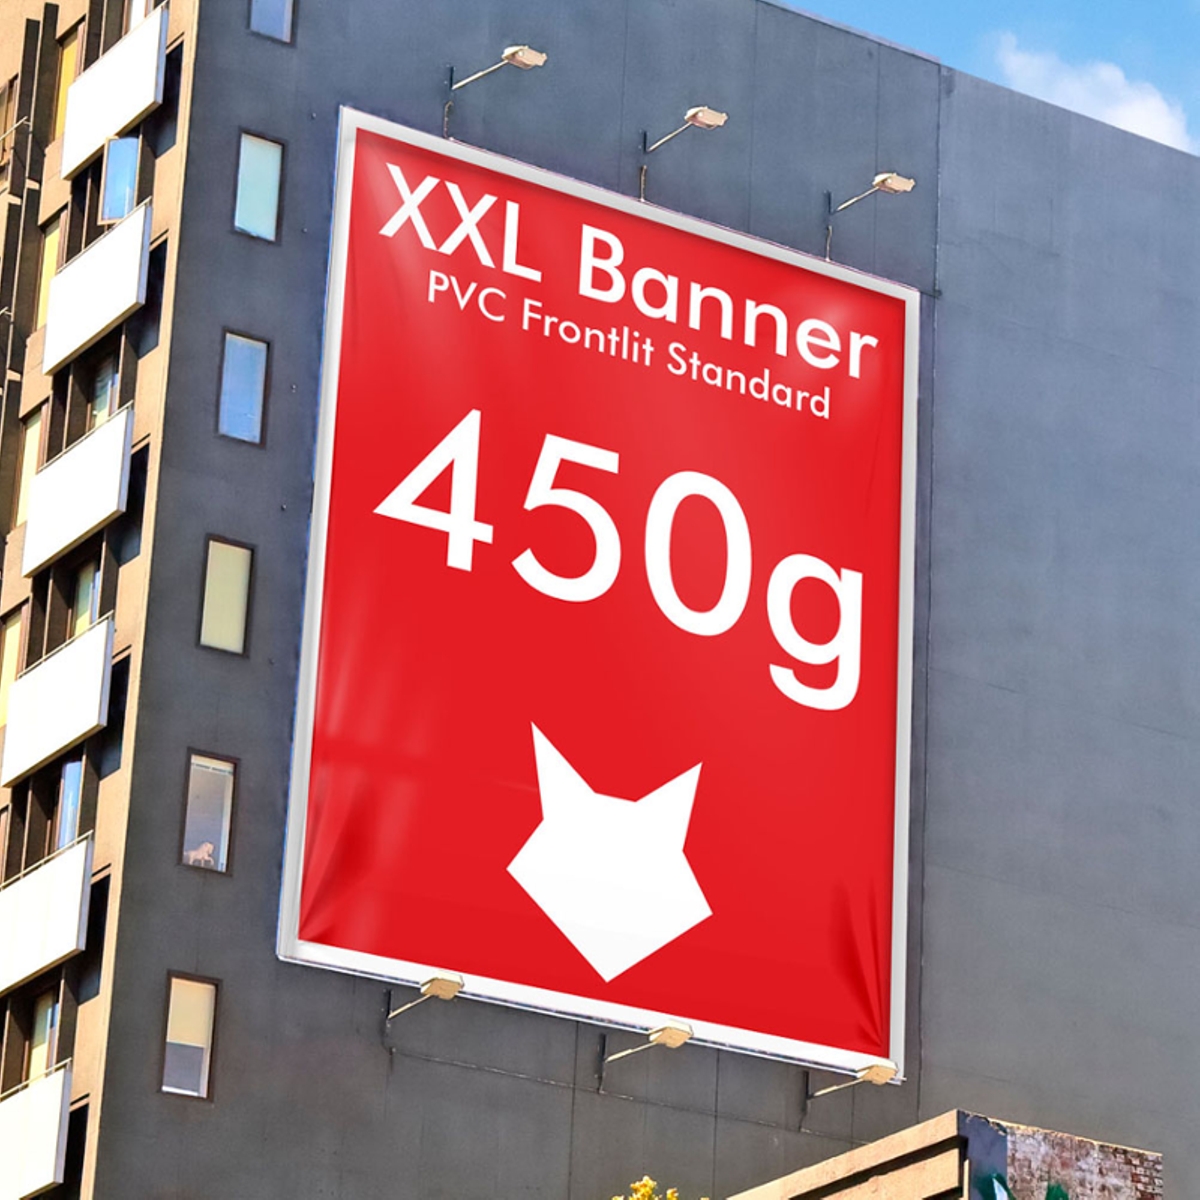 XXL Banner selbst gestalten, PVC Frontlit Standard